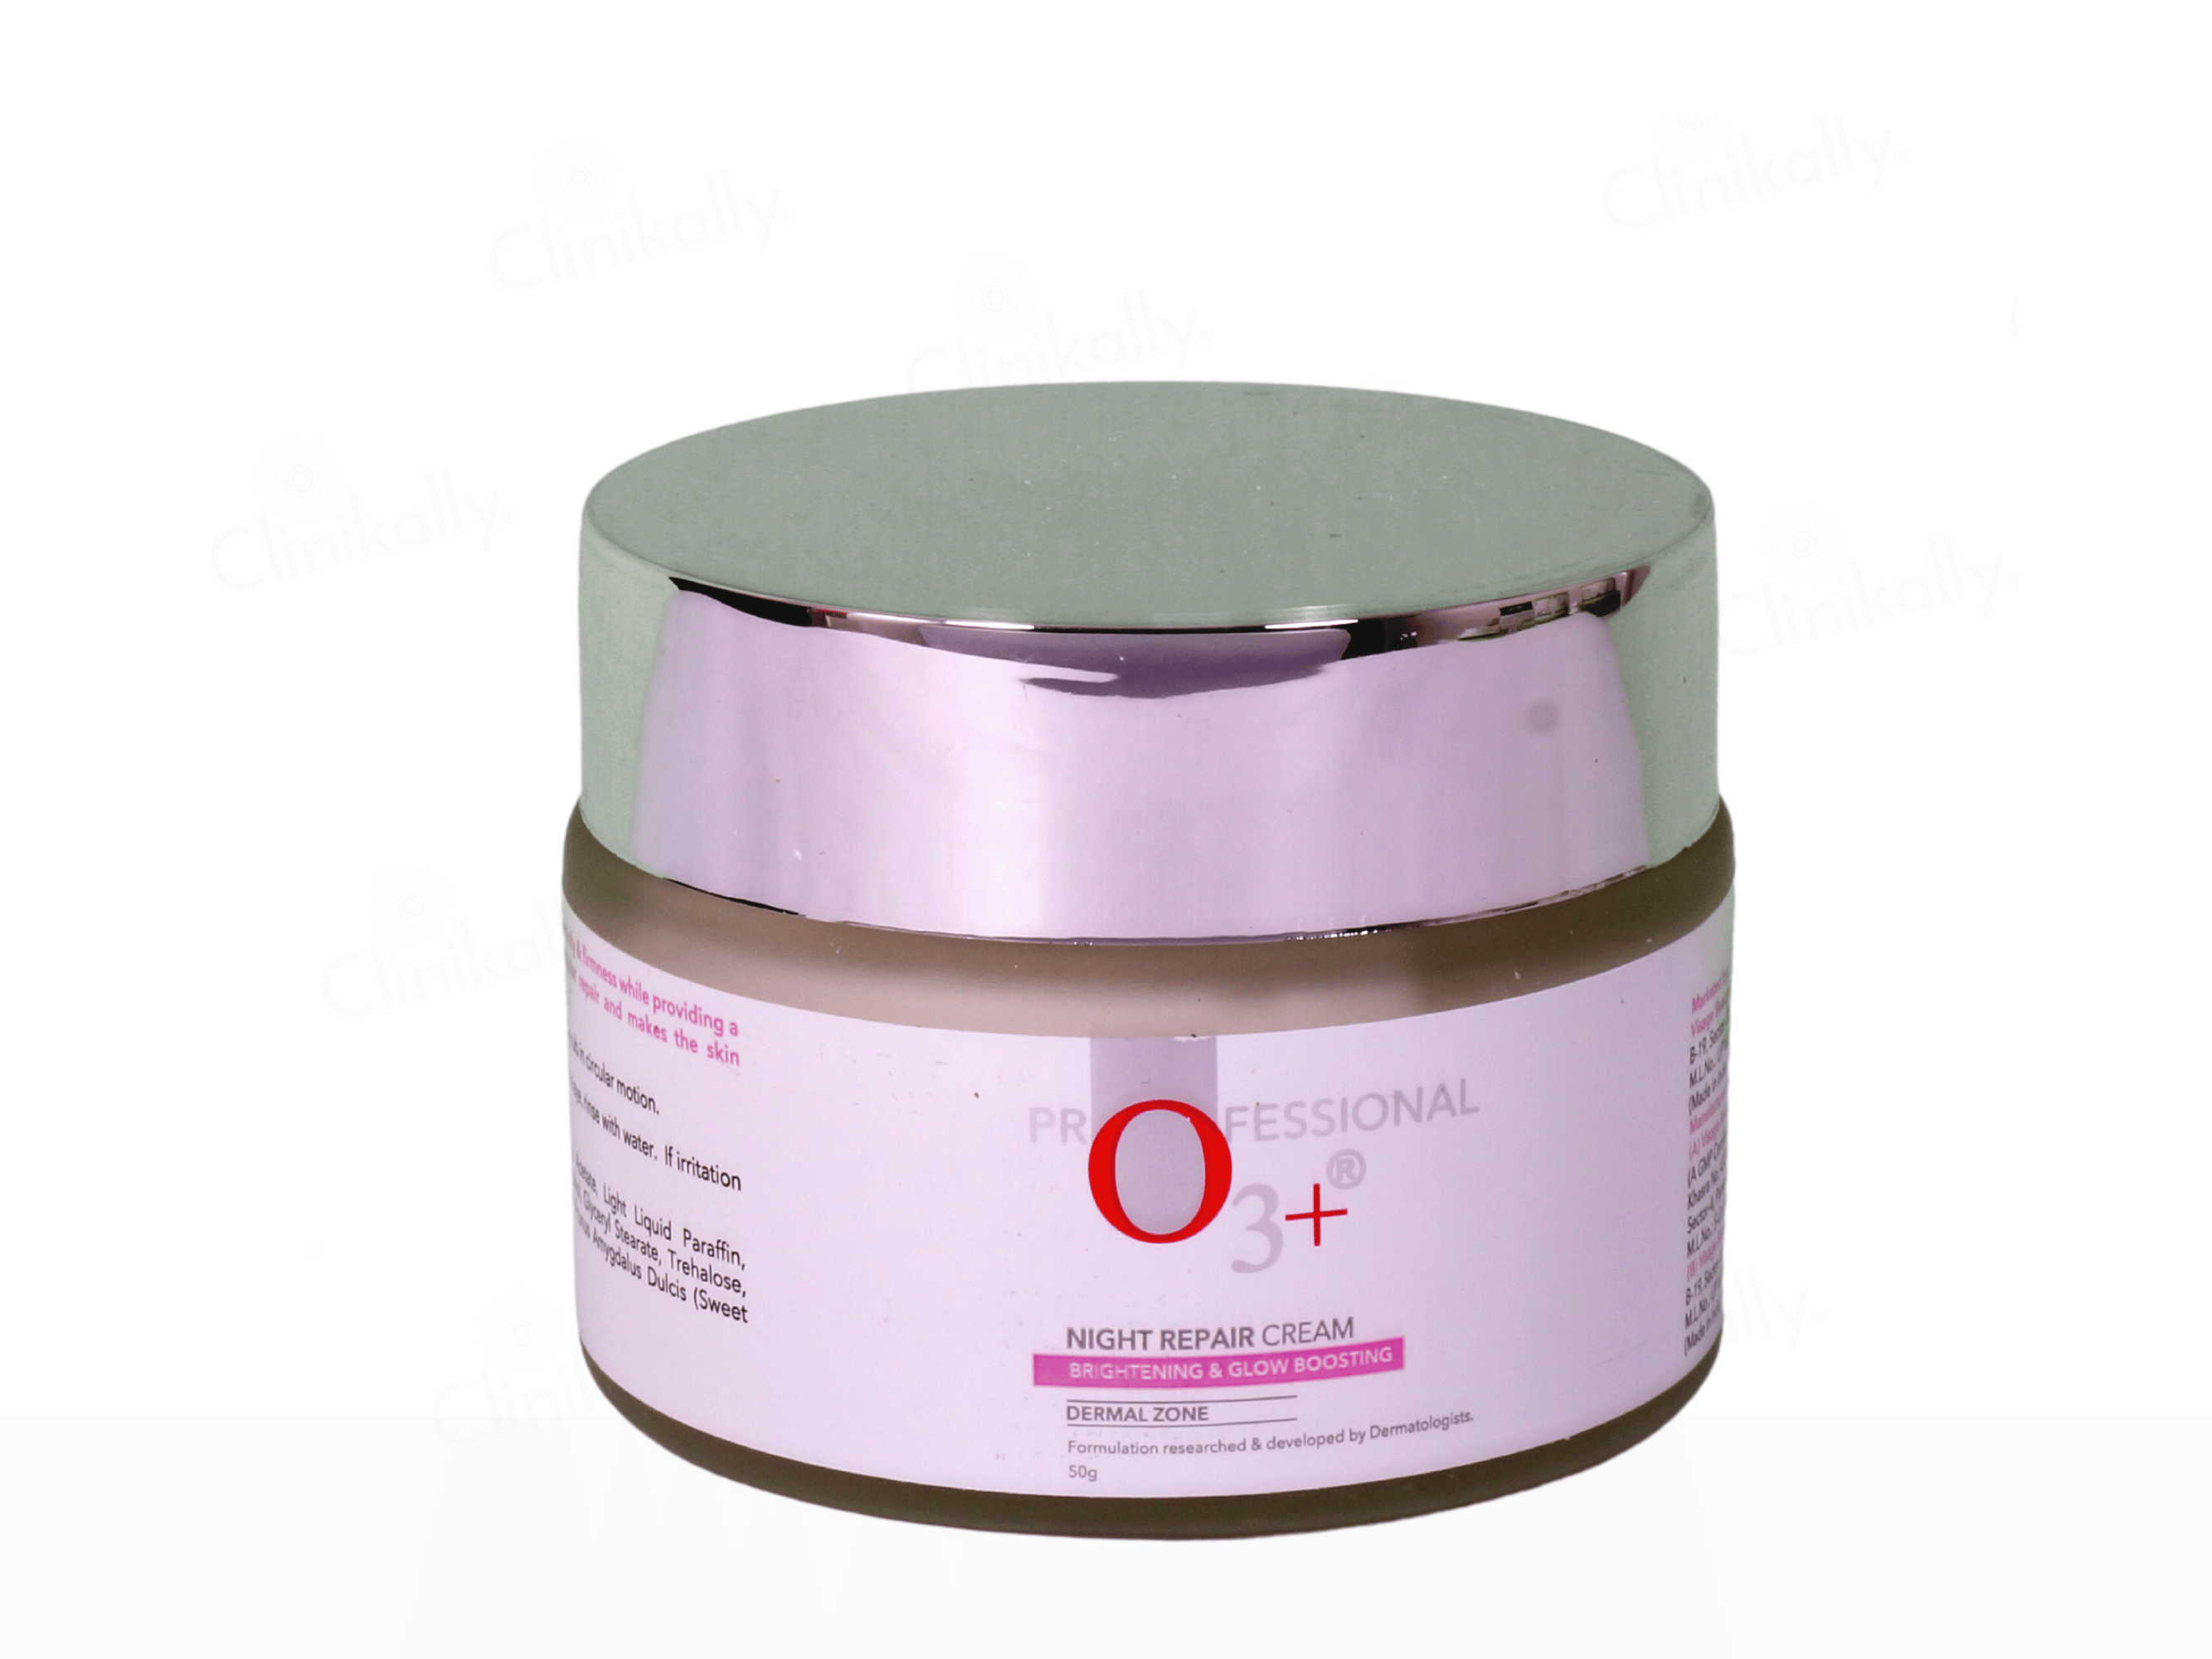 O3+ Night Repair Cream Brightening & Glow Boosting-Clinikally